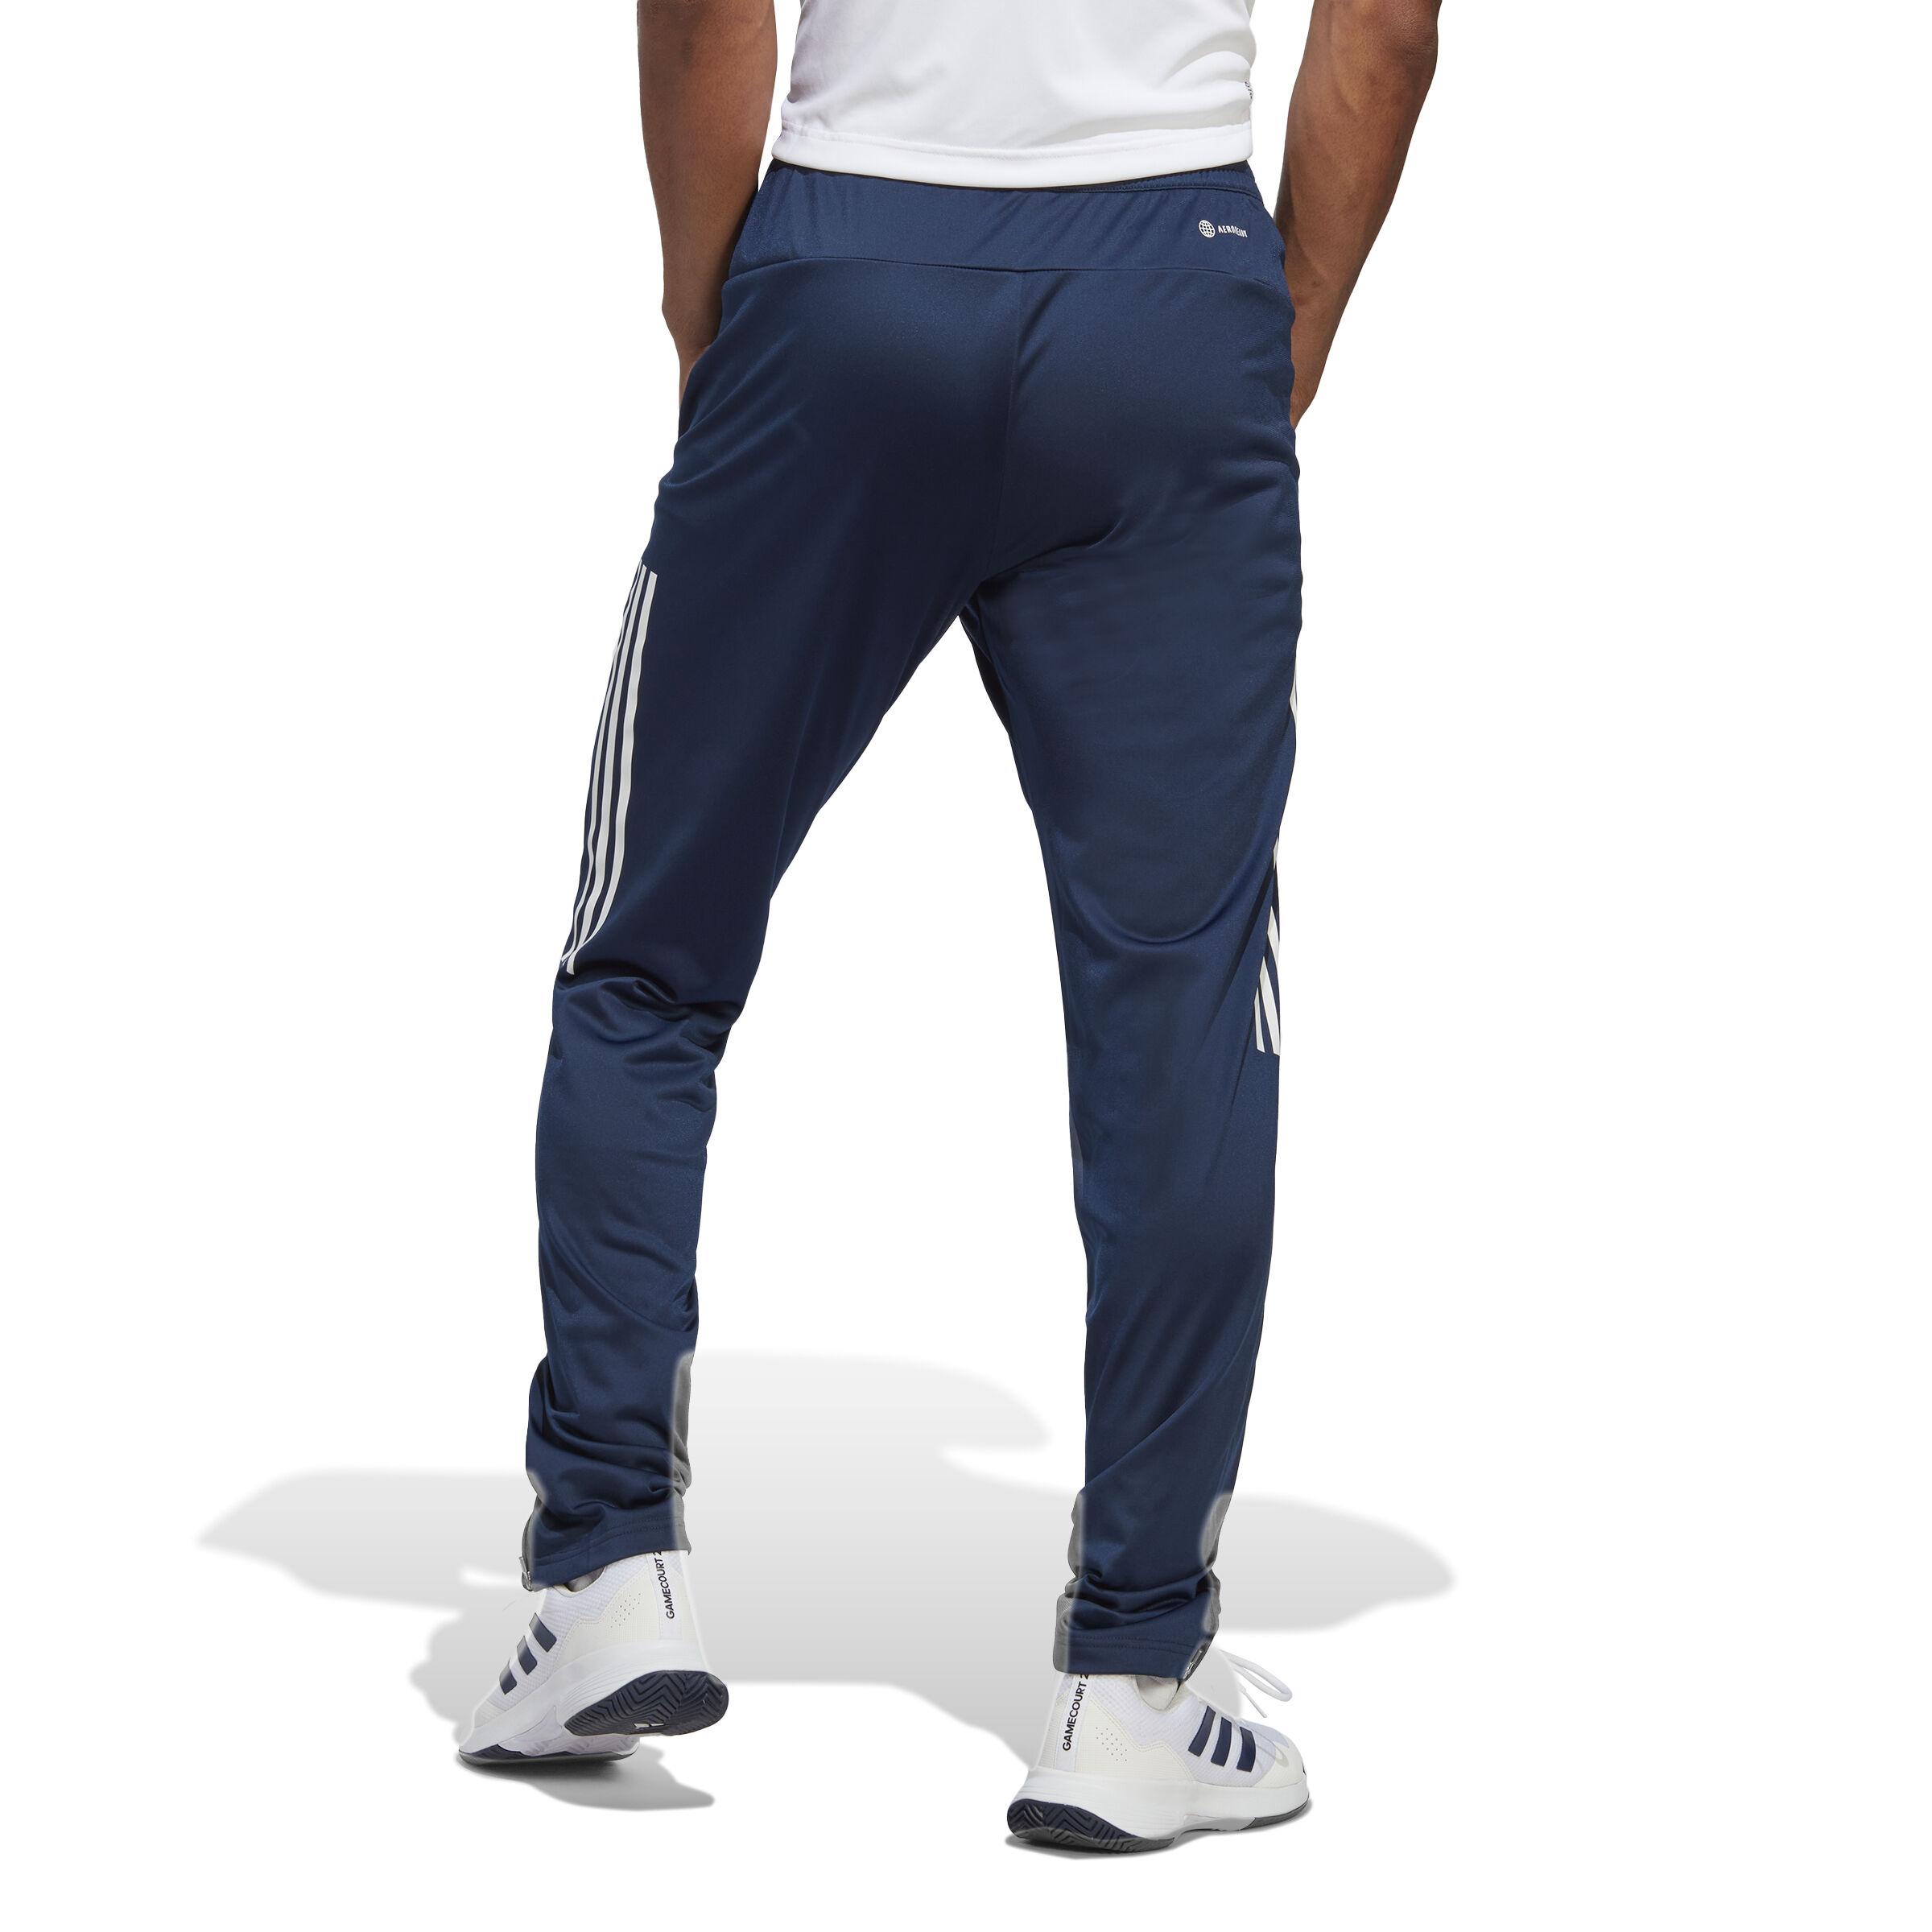 adidas Tiro 19 Men's Training Pants (DZ8773) Black Blue Reflective Zip Size  S | eBay